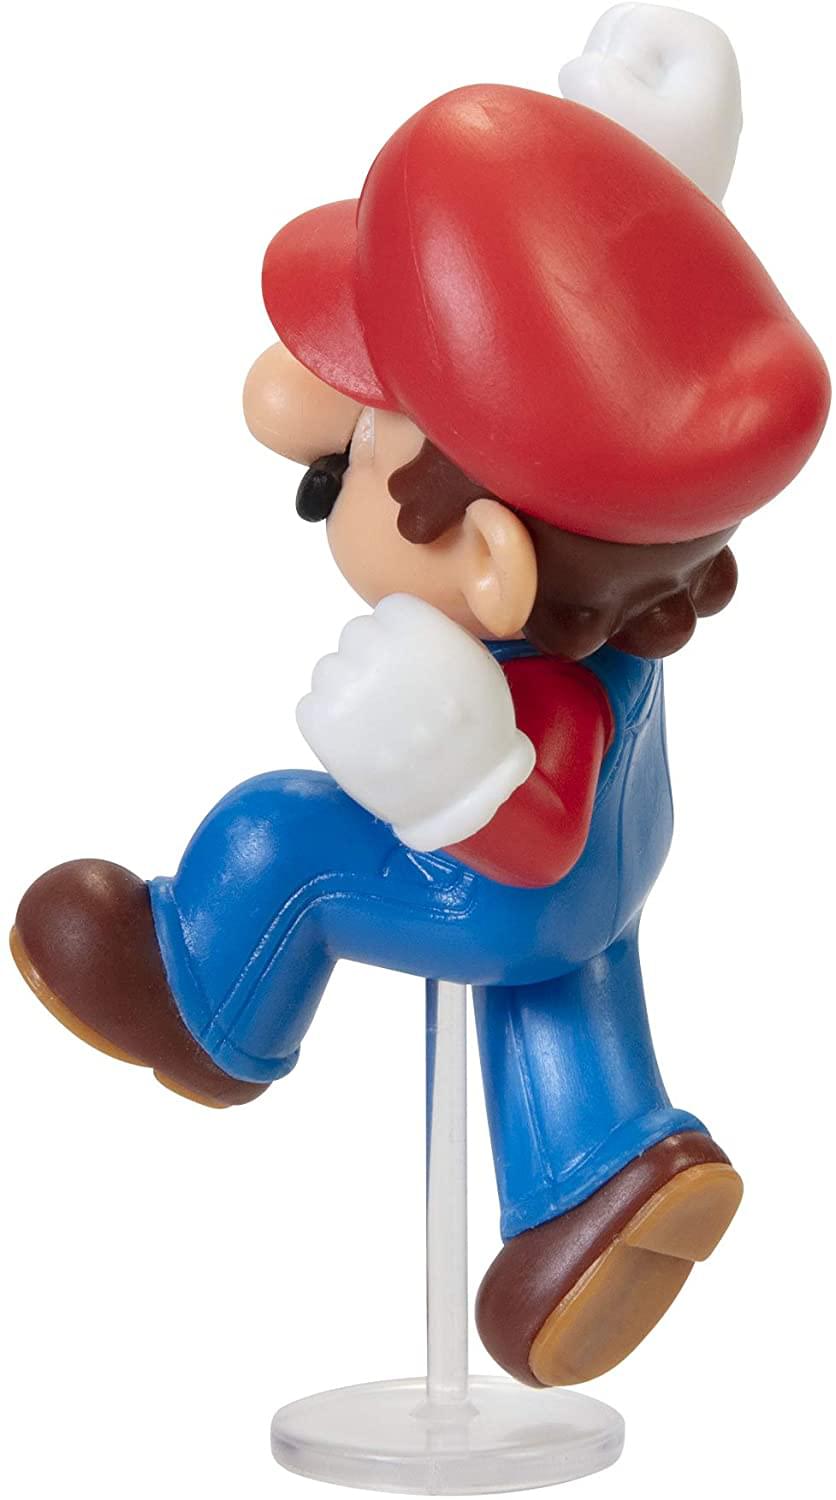 Super Mario World of Nintendo 2.5 Inch Figure | Jumping Mario